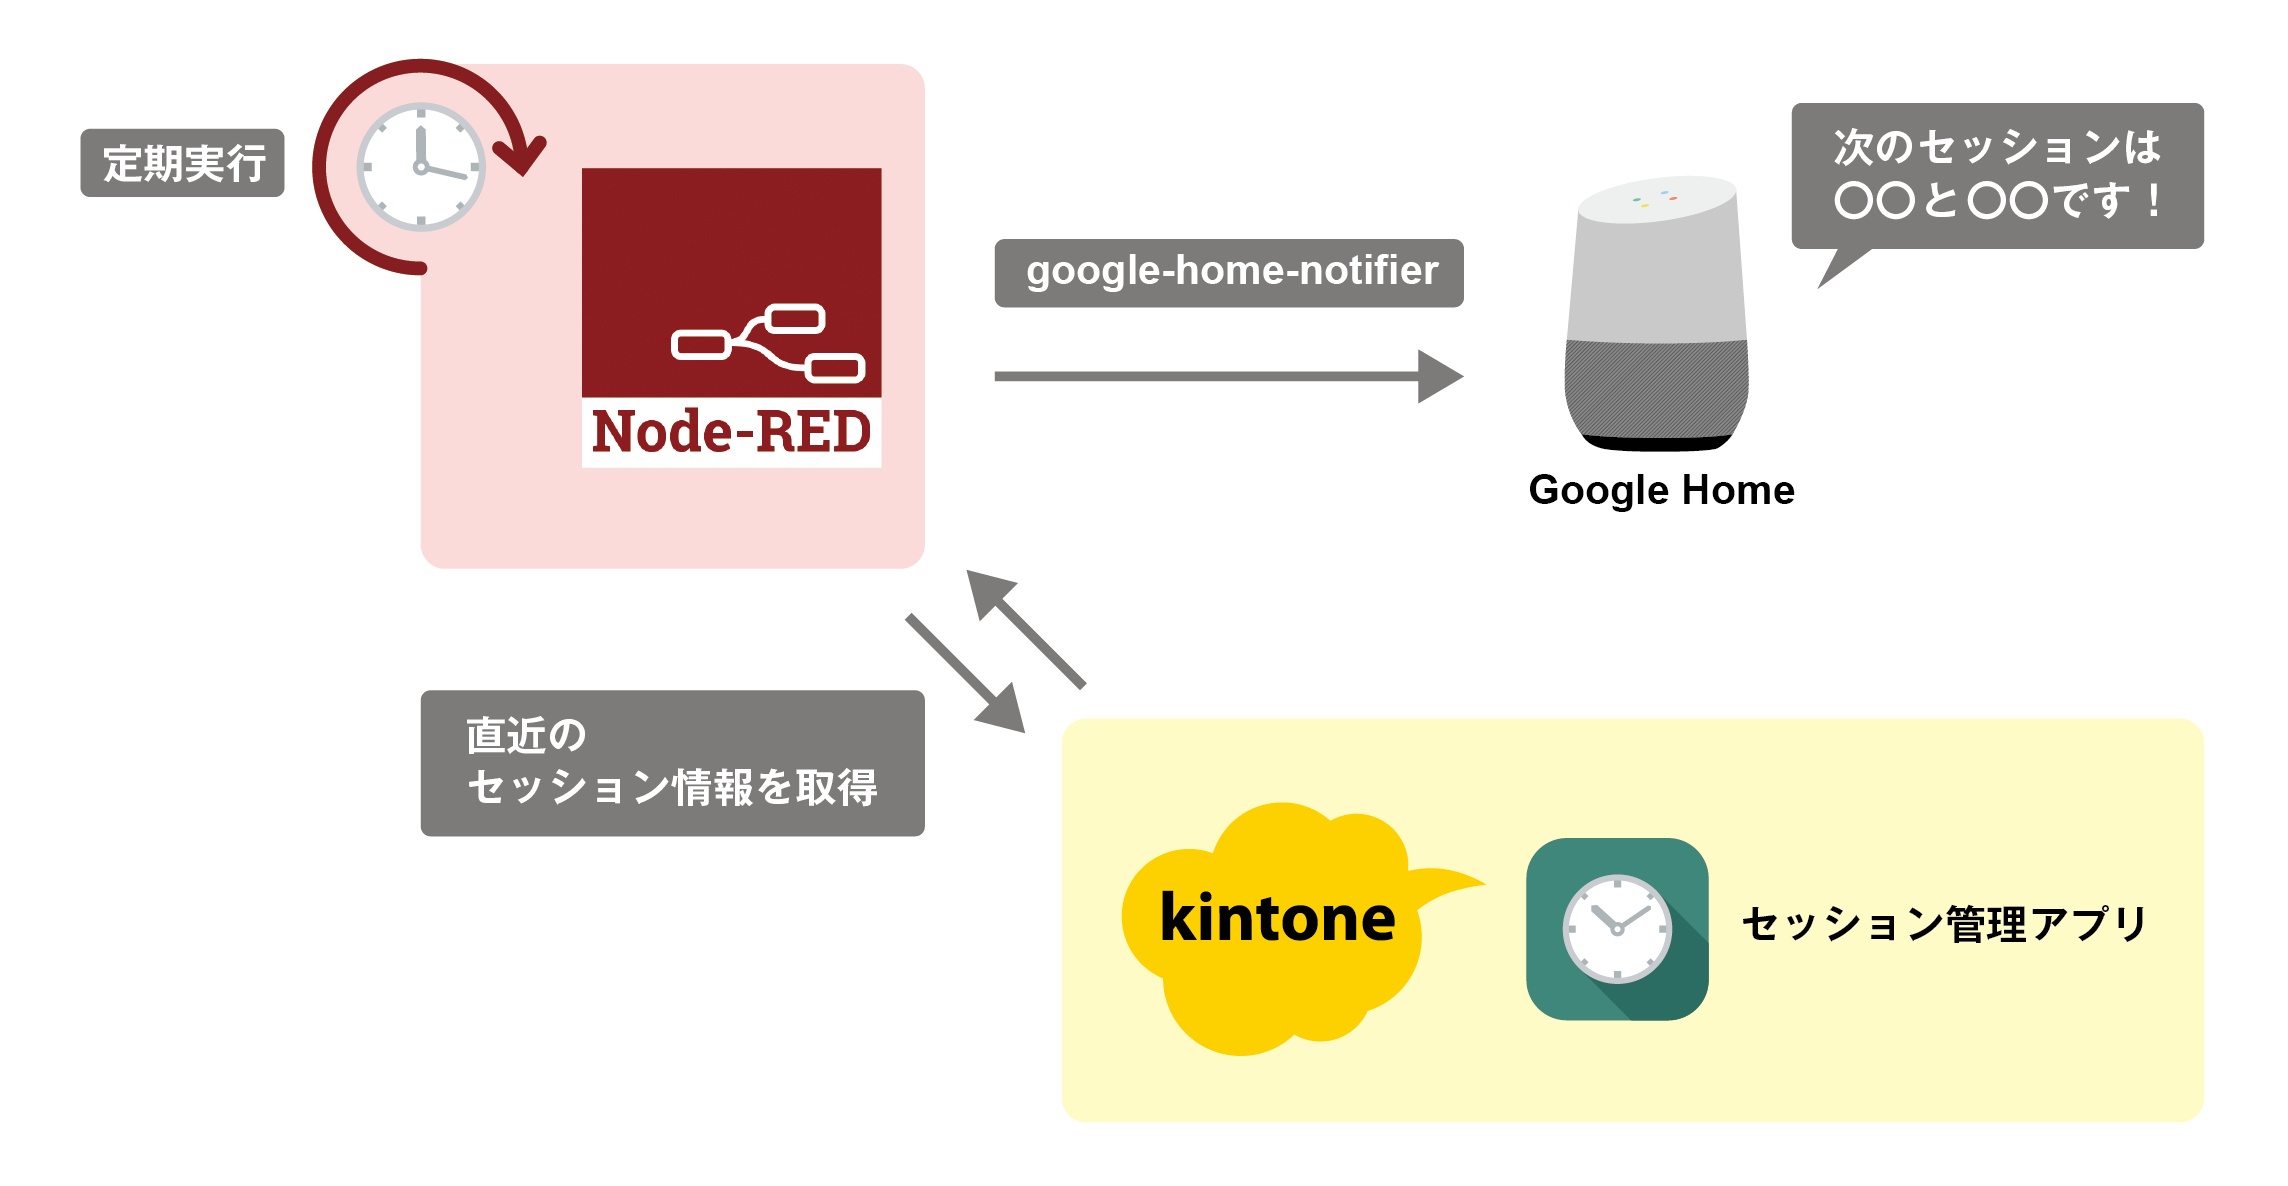 kintone と Google Home 連携のイメージ画像